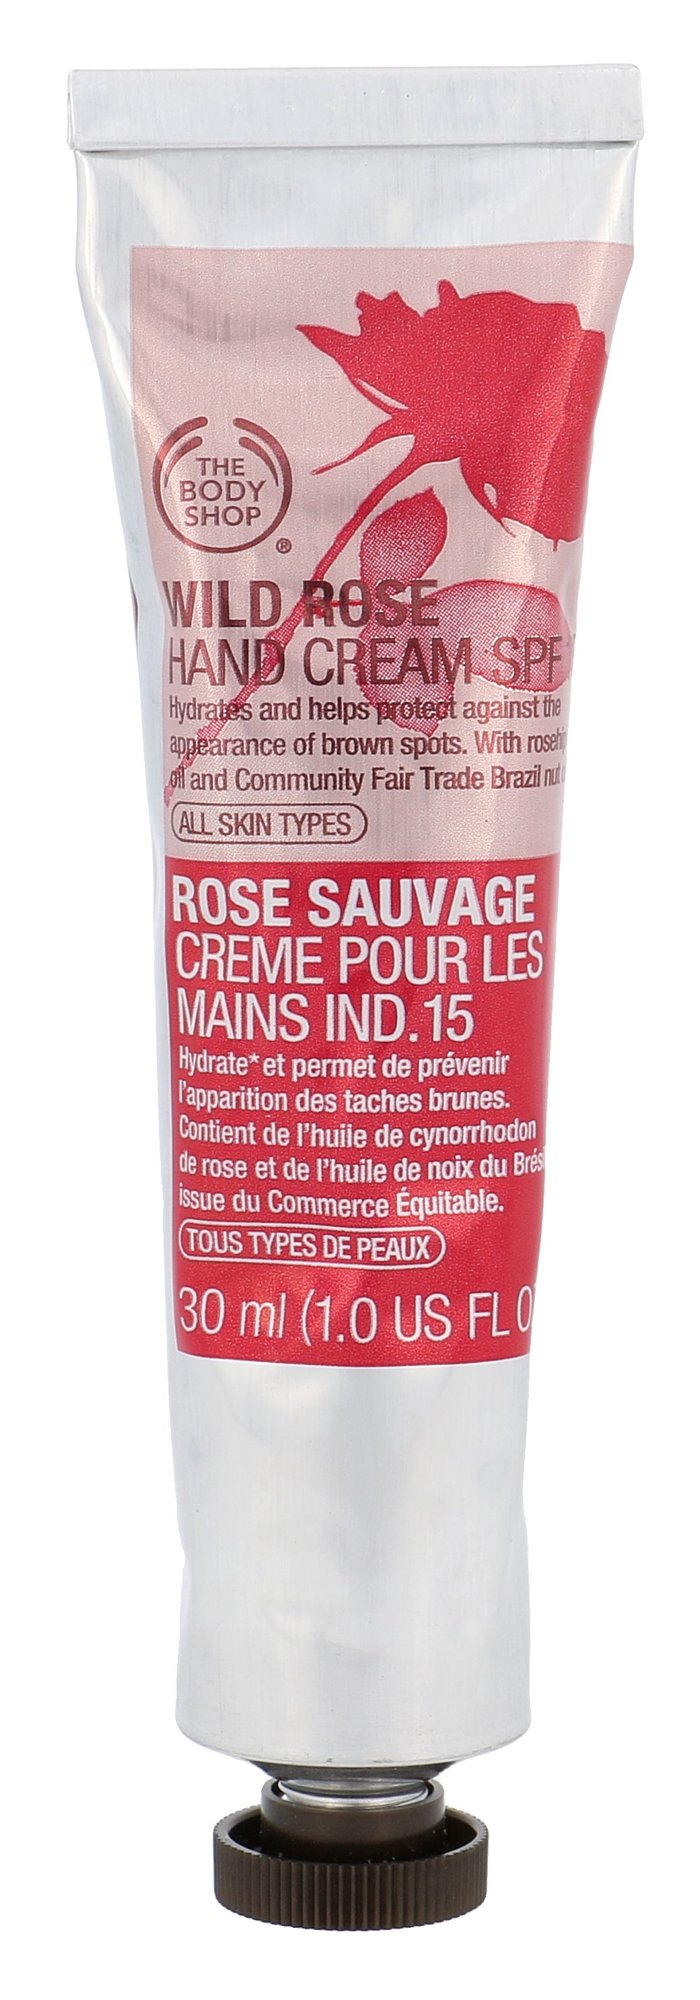 The Body Shop Wild Rose Hand Cream SPF15